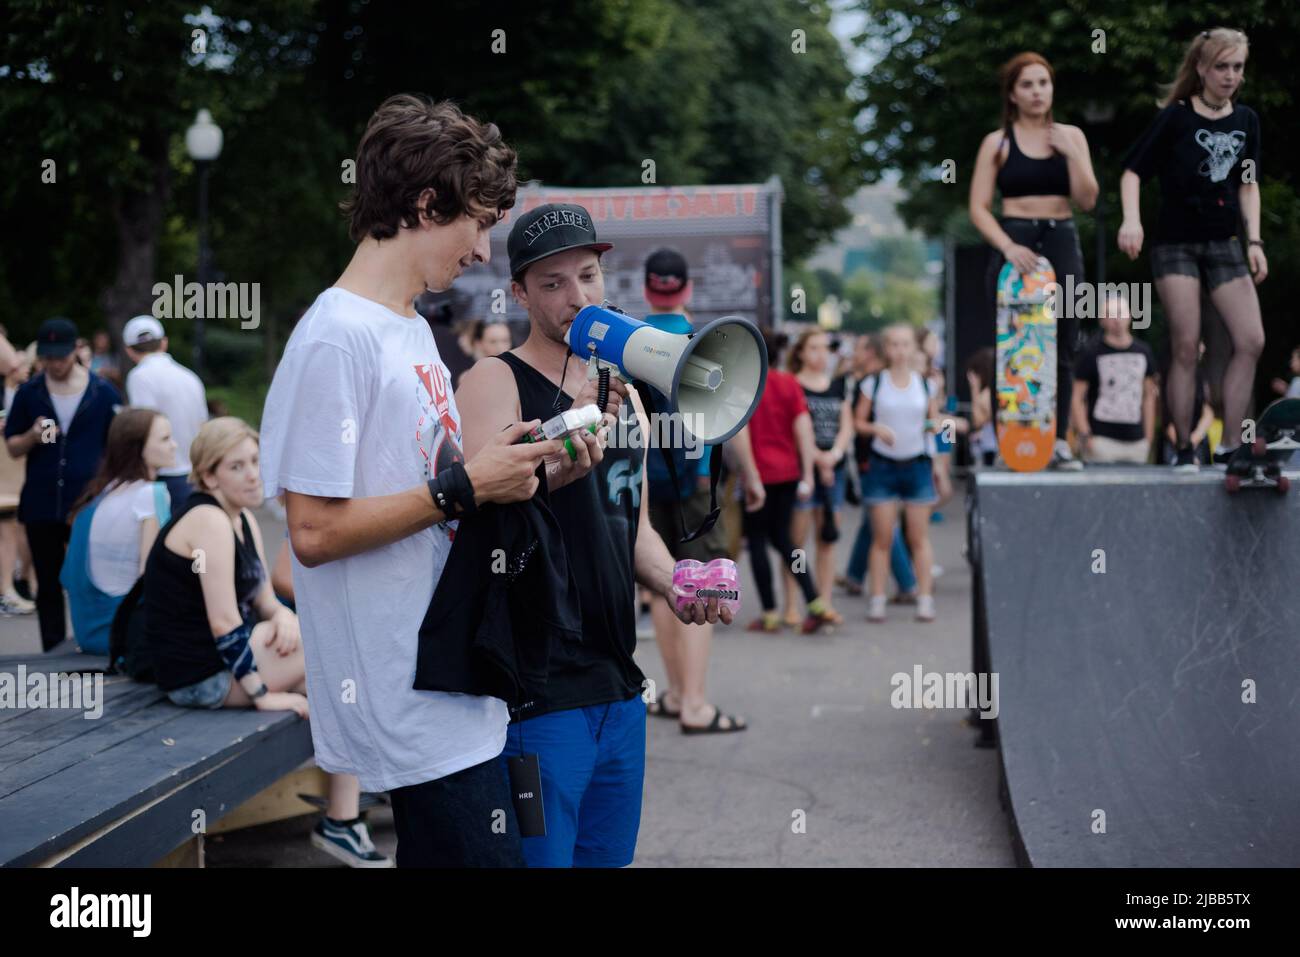 Moskau, Russland – 06 2016. August: Faces & Laces Street Culture and Youth Festival im Moskauer Gorki-Park mit einem Megaphon bewertet Skater-Trick Stockfoto